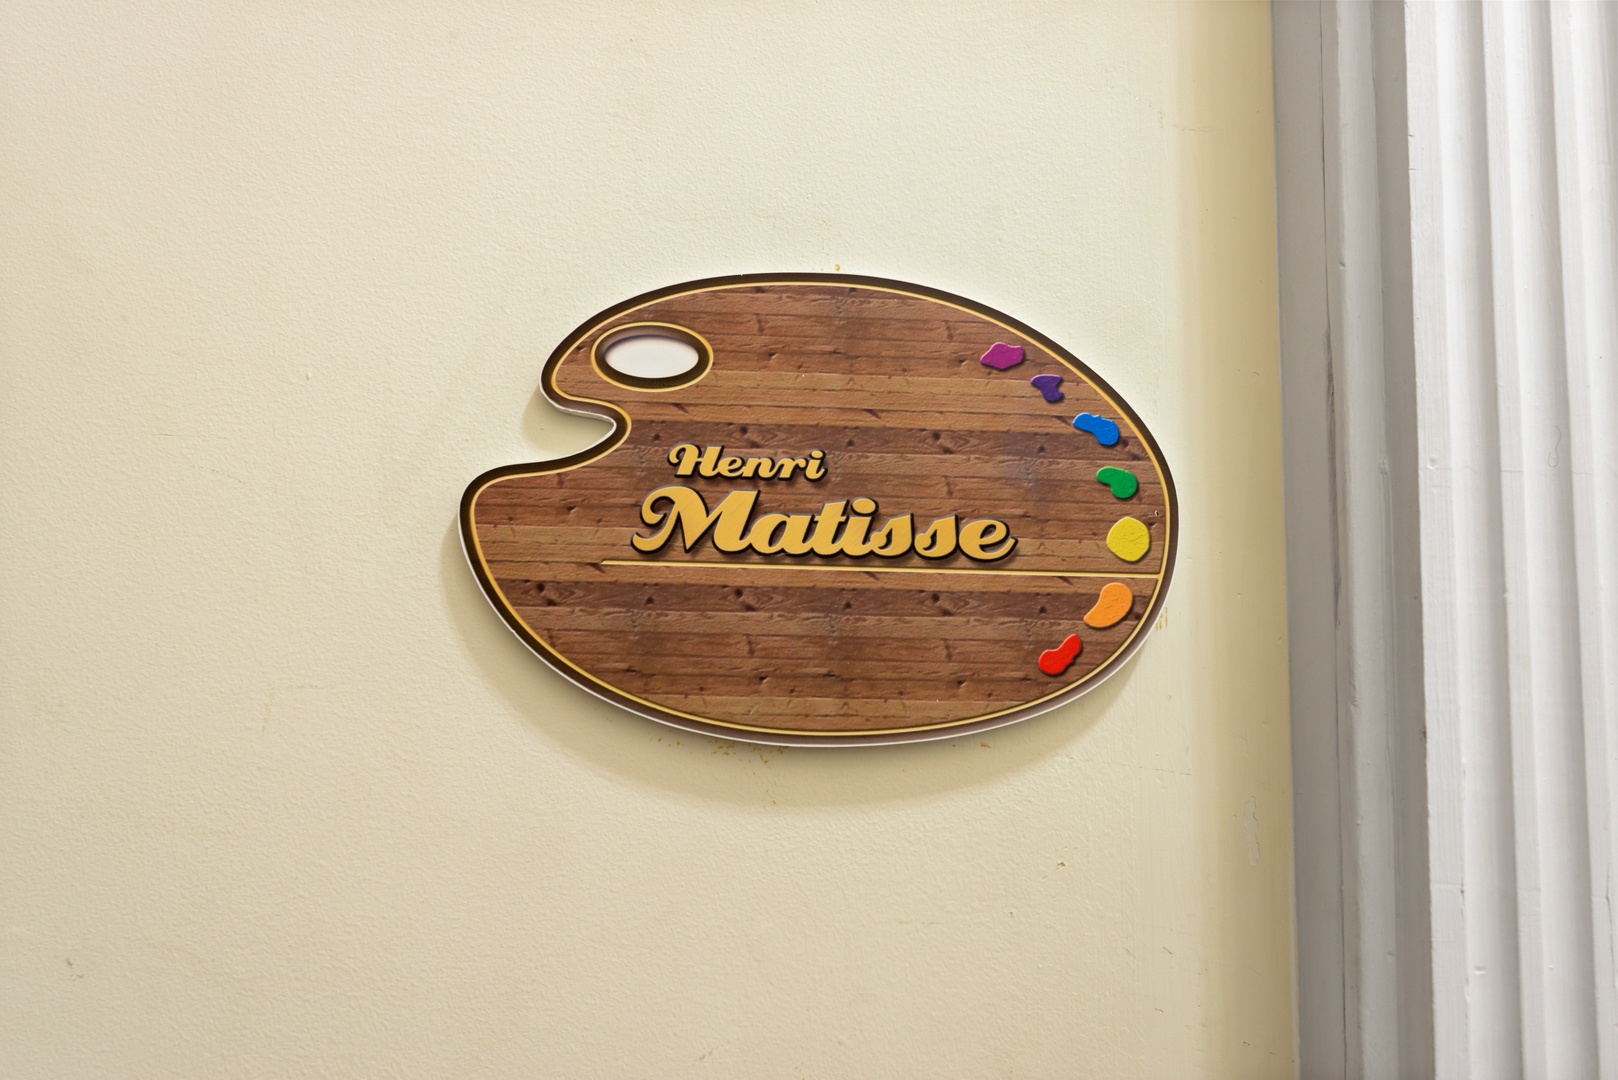 Matisse's Studio @ the Galleria Key West - Matisse's Palette Welcome Sign